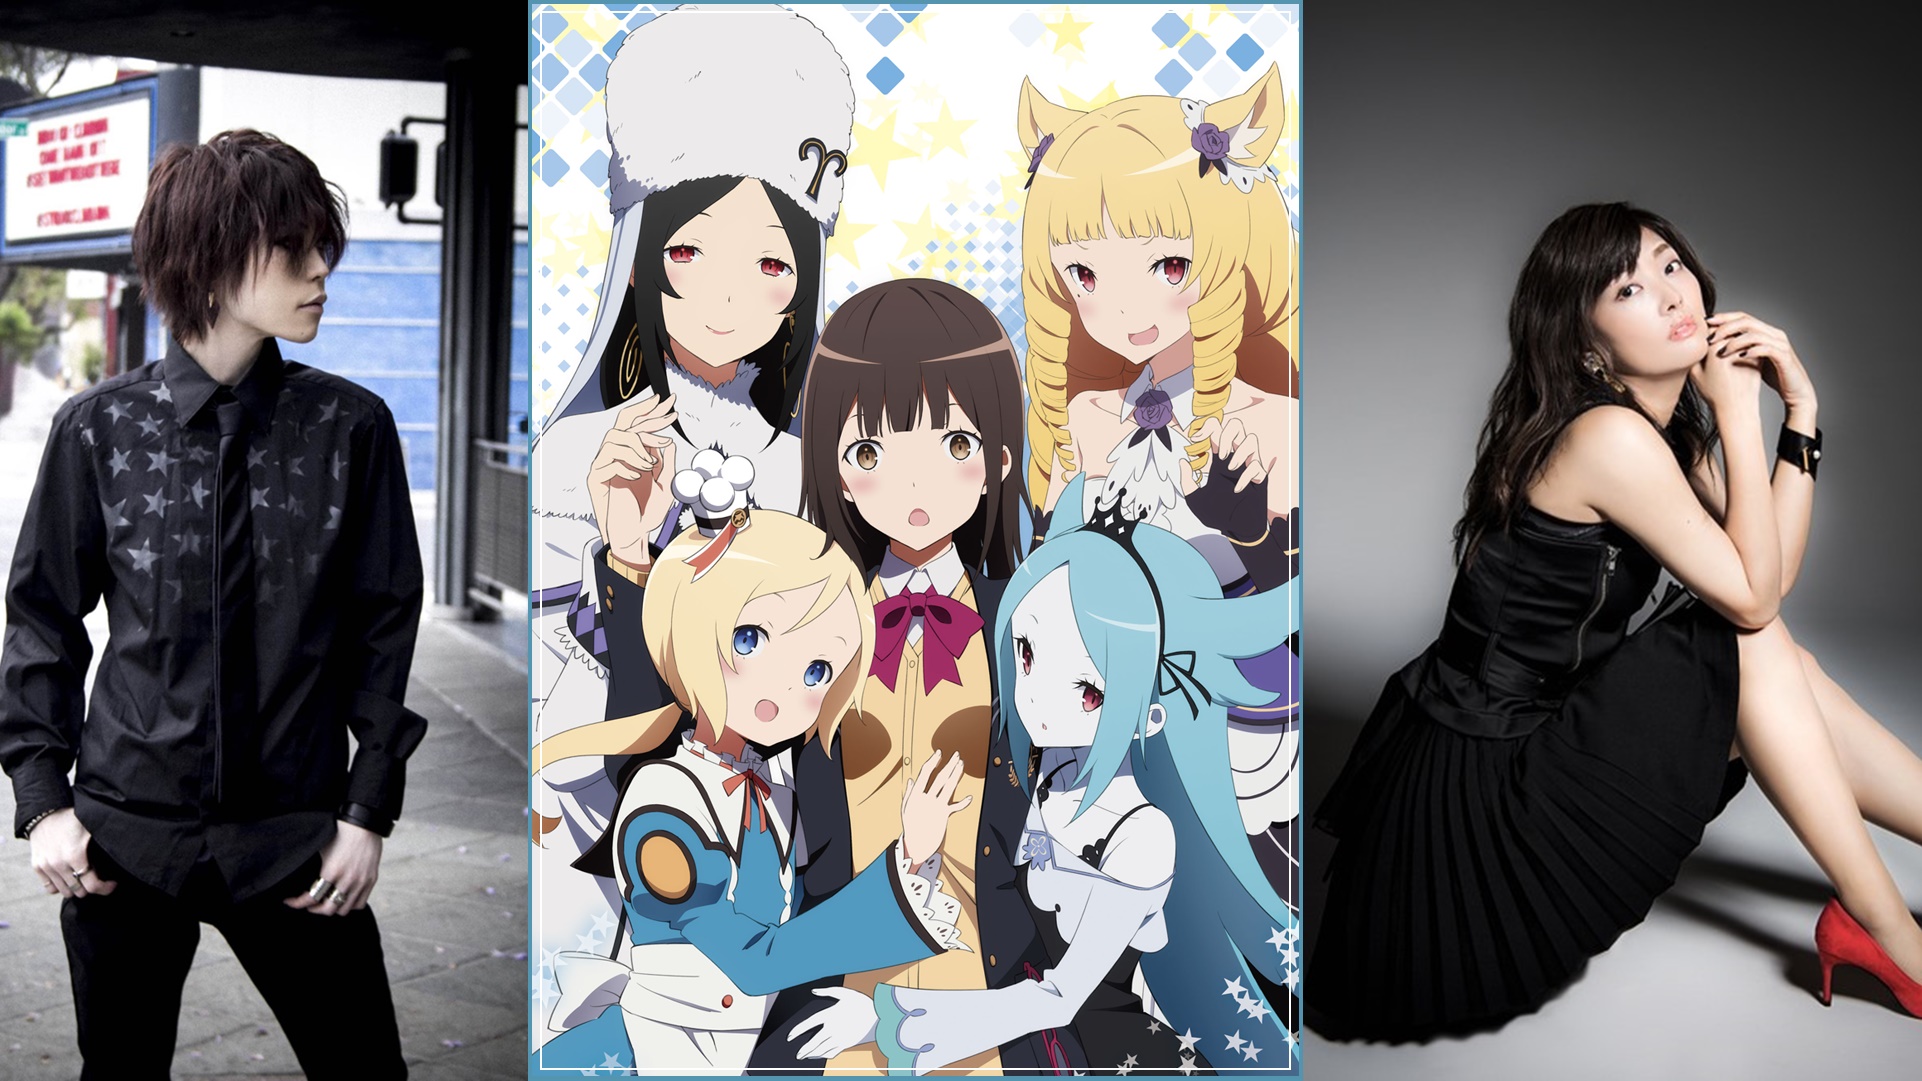 Conception TV Anime Casts Makiko Ohmoto, Yuriko Yamaguchi, Kazusa